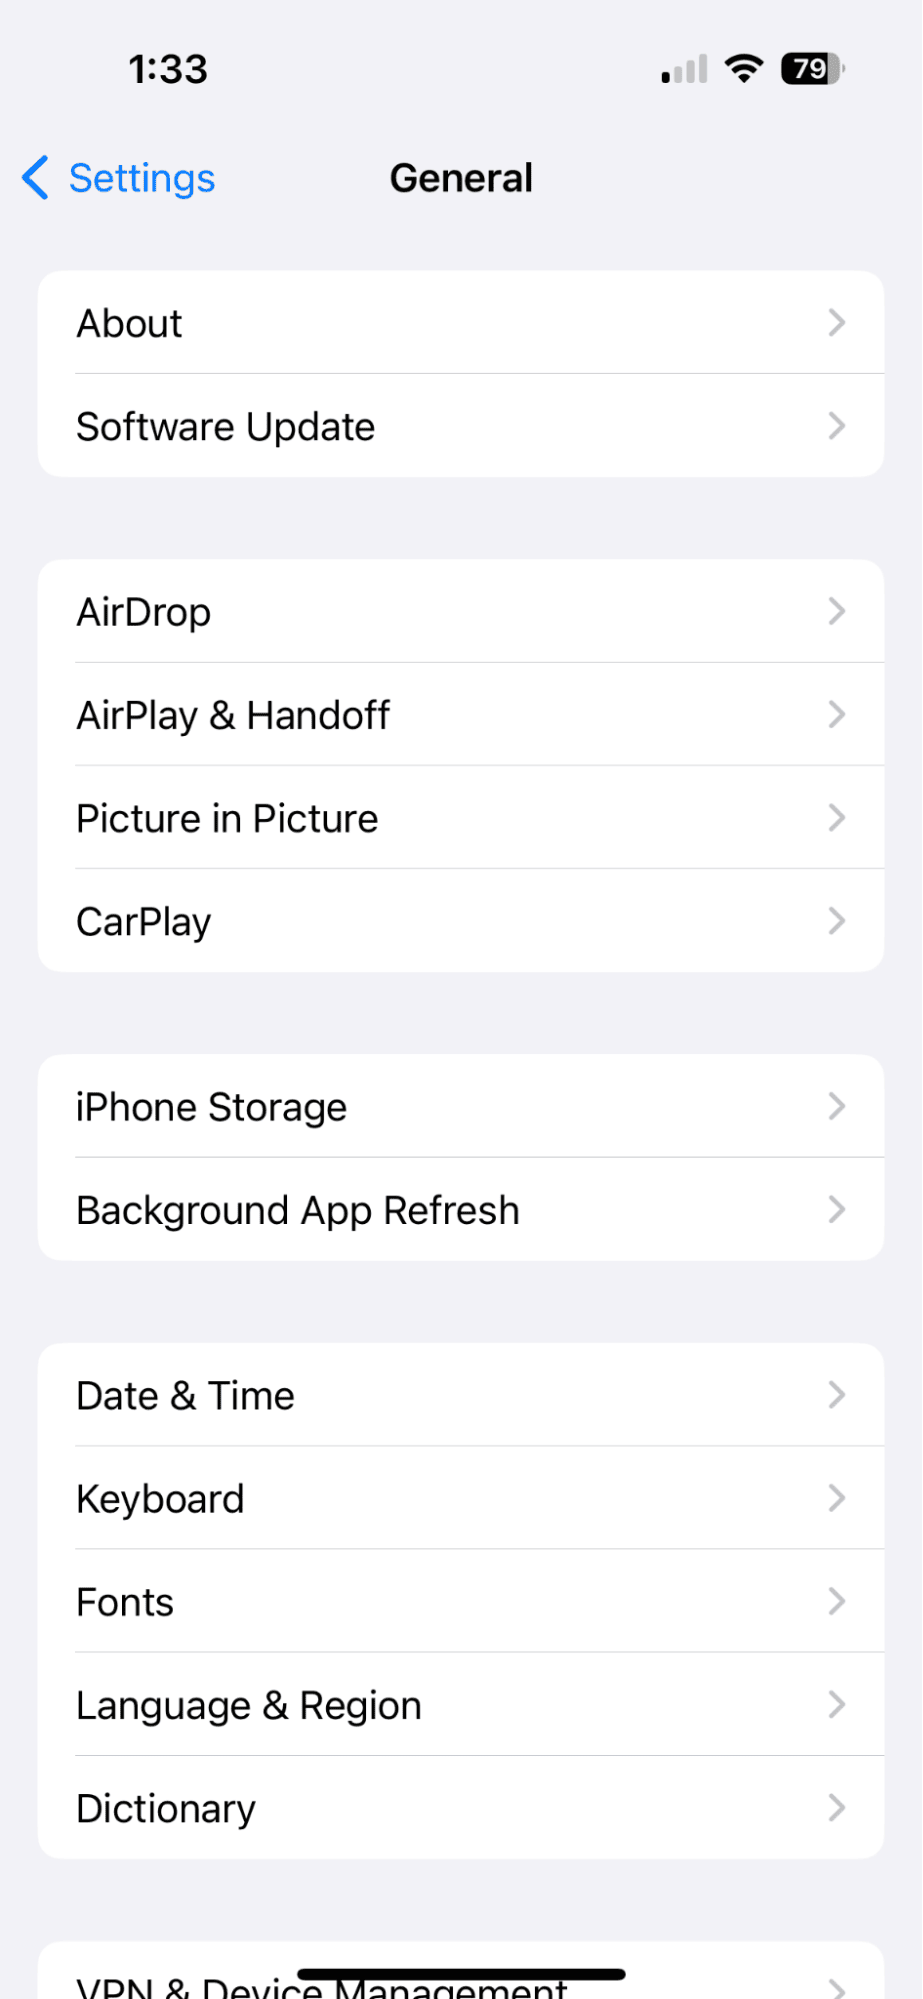 Check iPhone storage